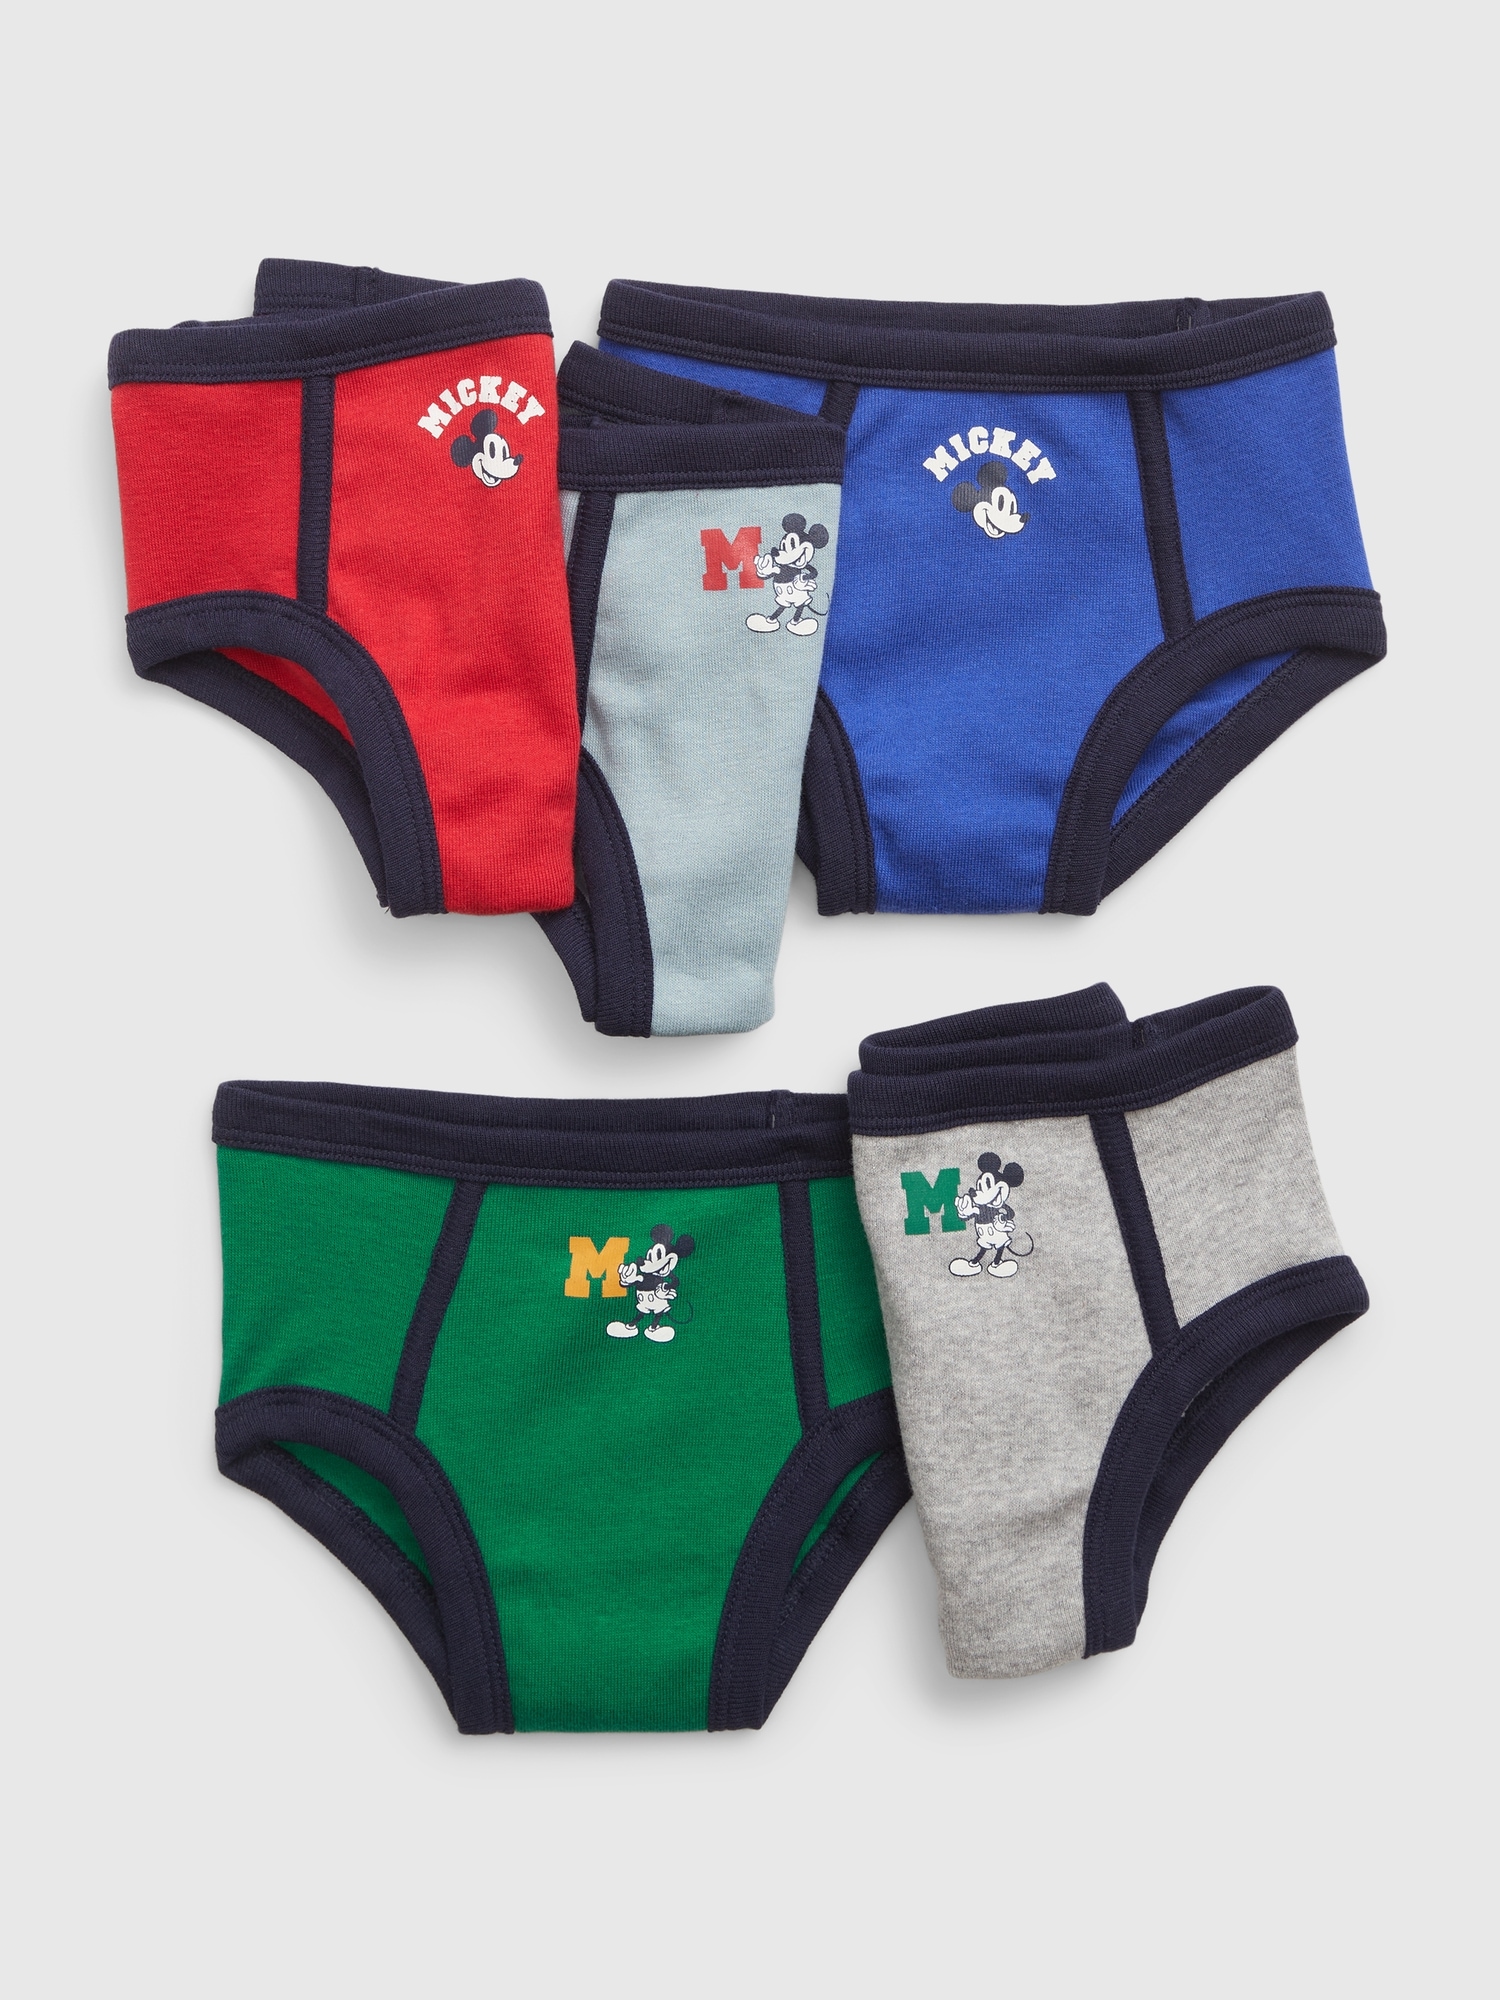 Disney Mickey Mouse Boys Briefs Underwear 8-Pack Sizes 2T/3T 100% Cotton NIP